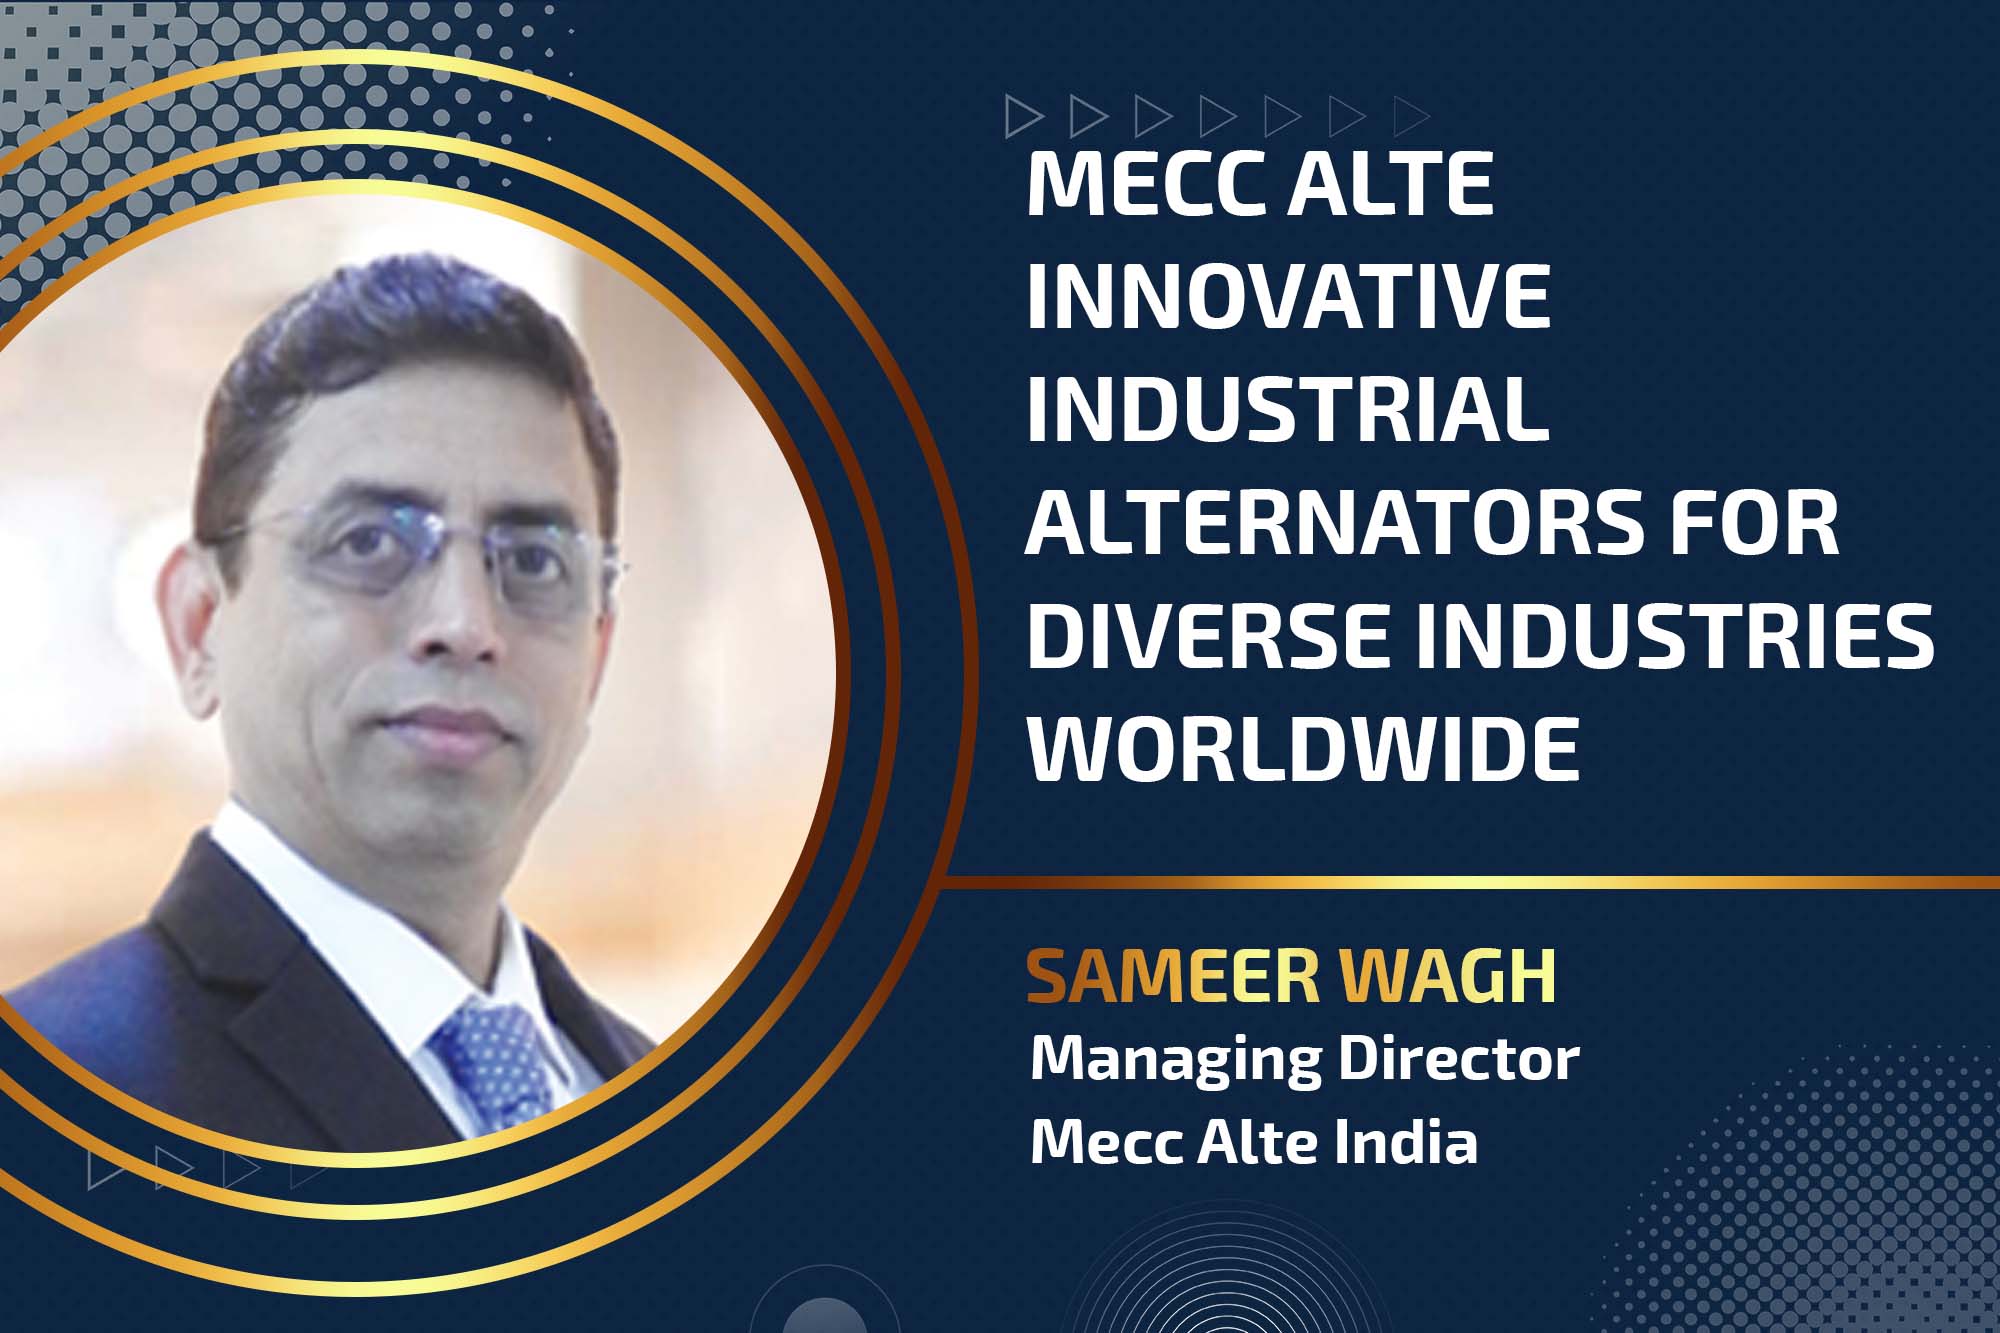 MeccAlte innovative industrial alternators for diverse industries worldwide